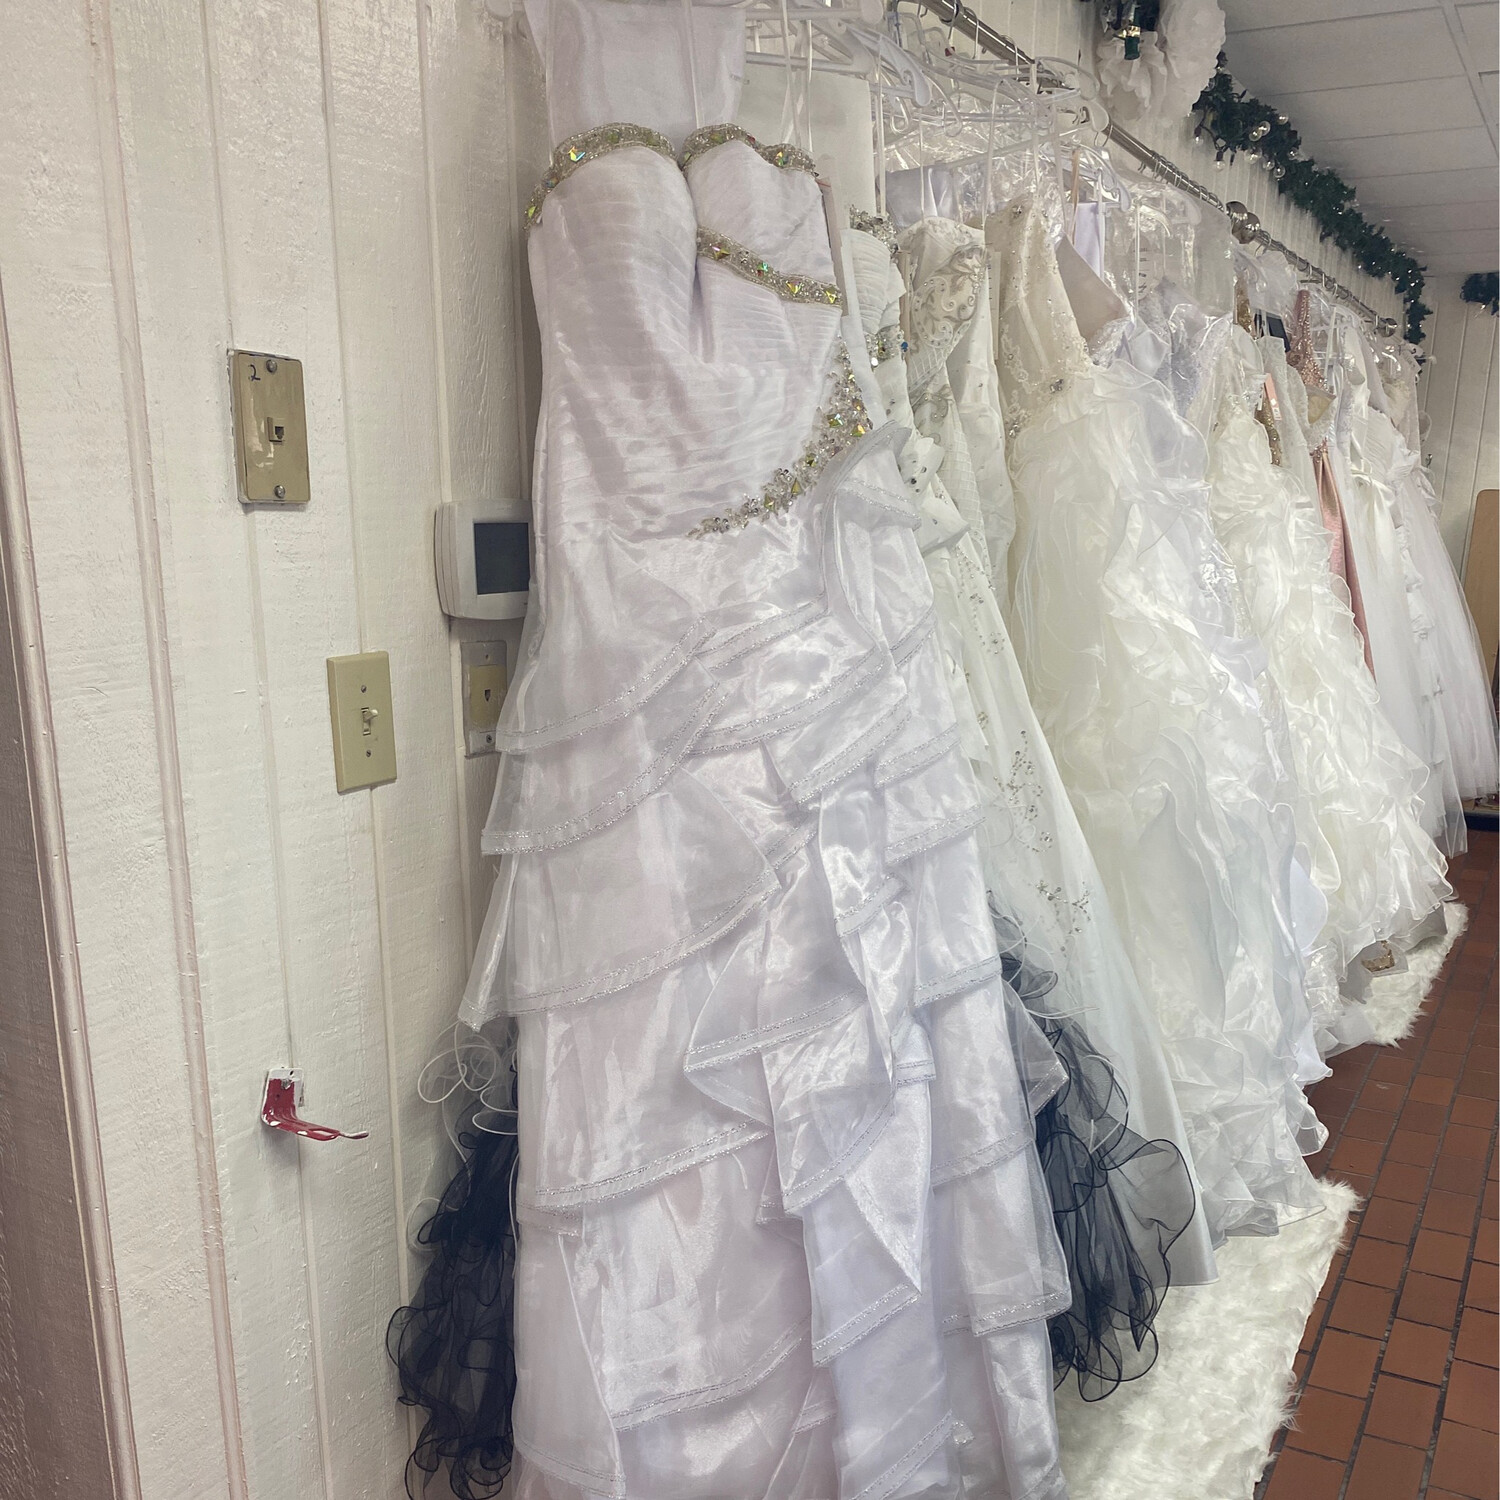 Stunning Bling Wedding Gown Strapless